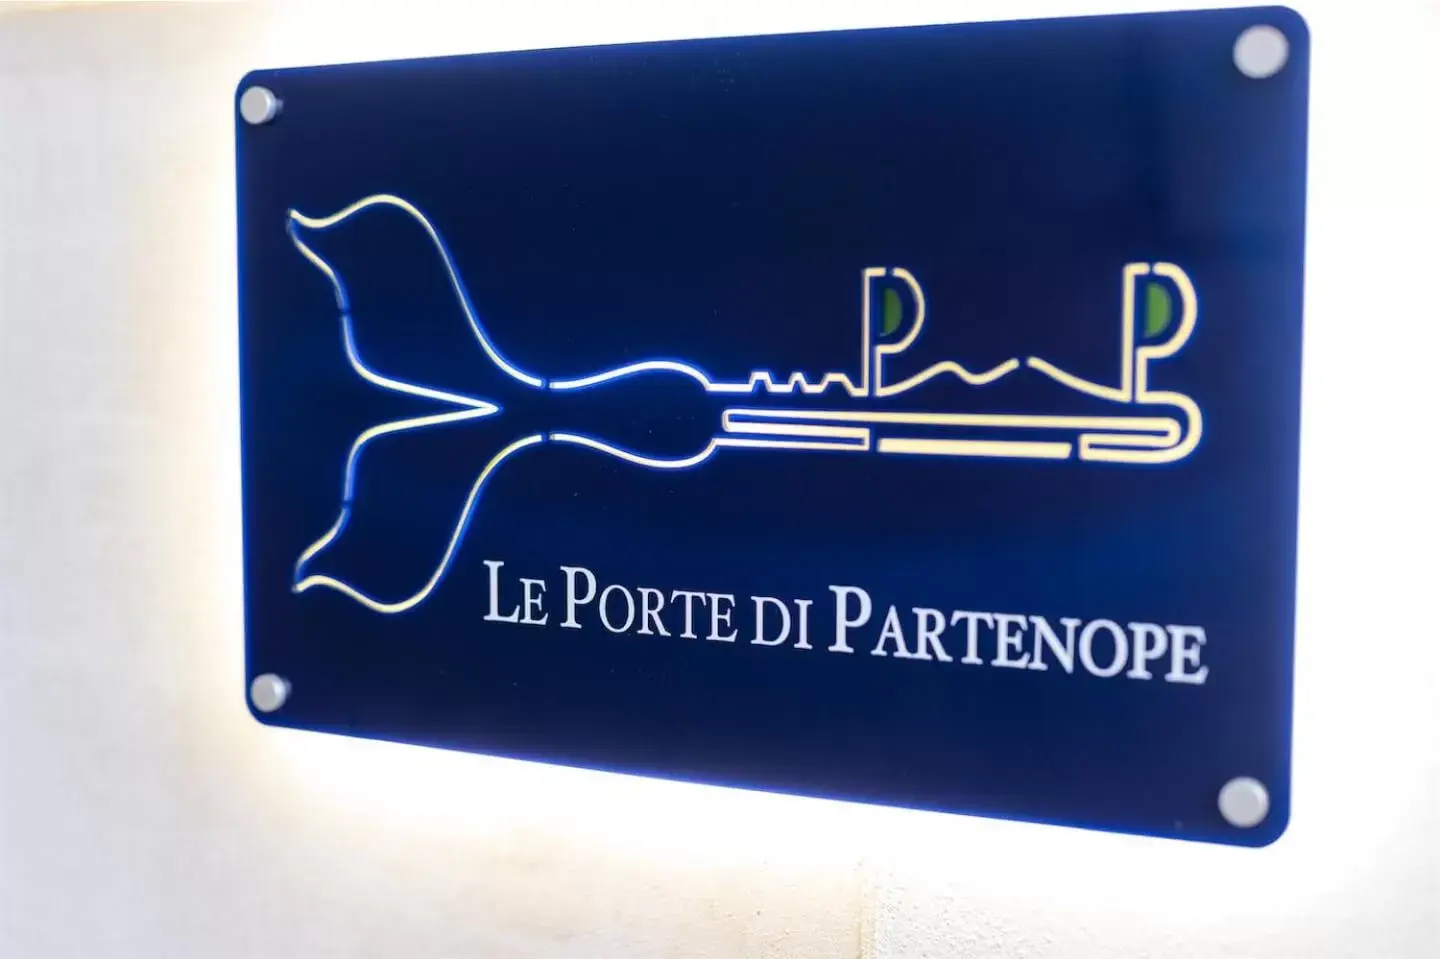 Property logo or sign in Le Porte di Partenope